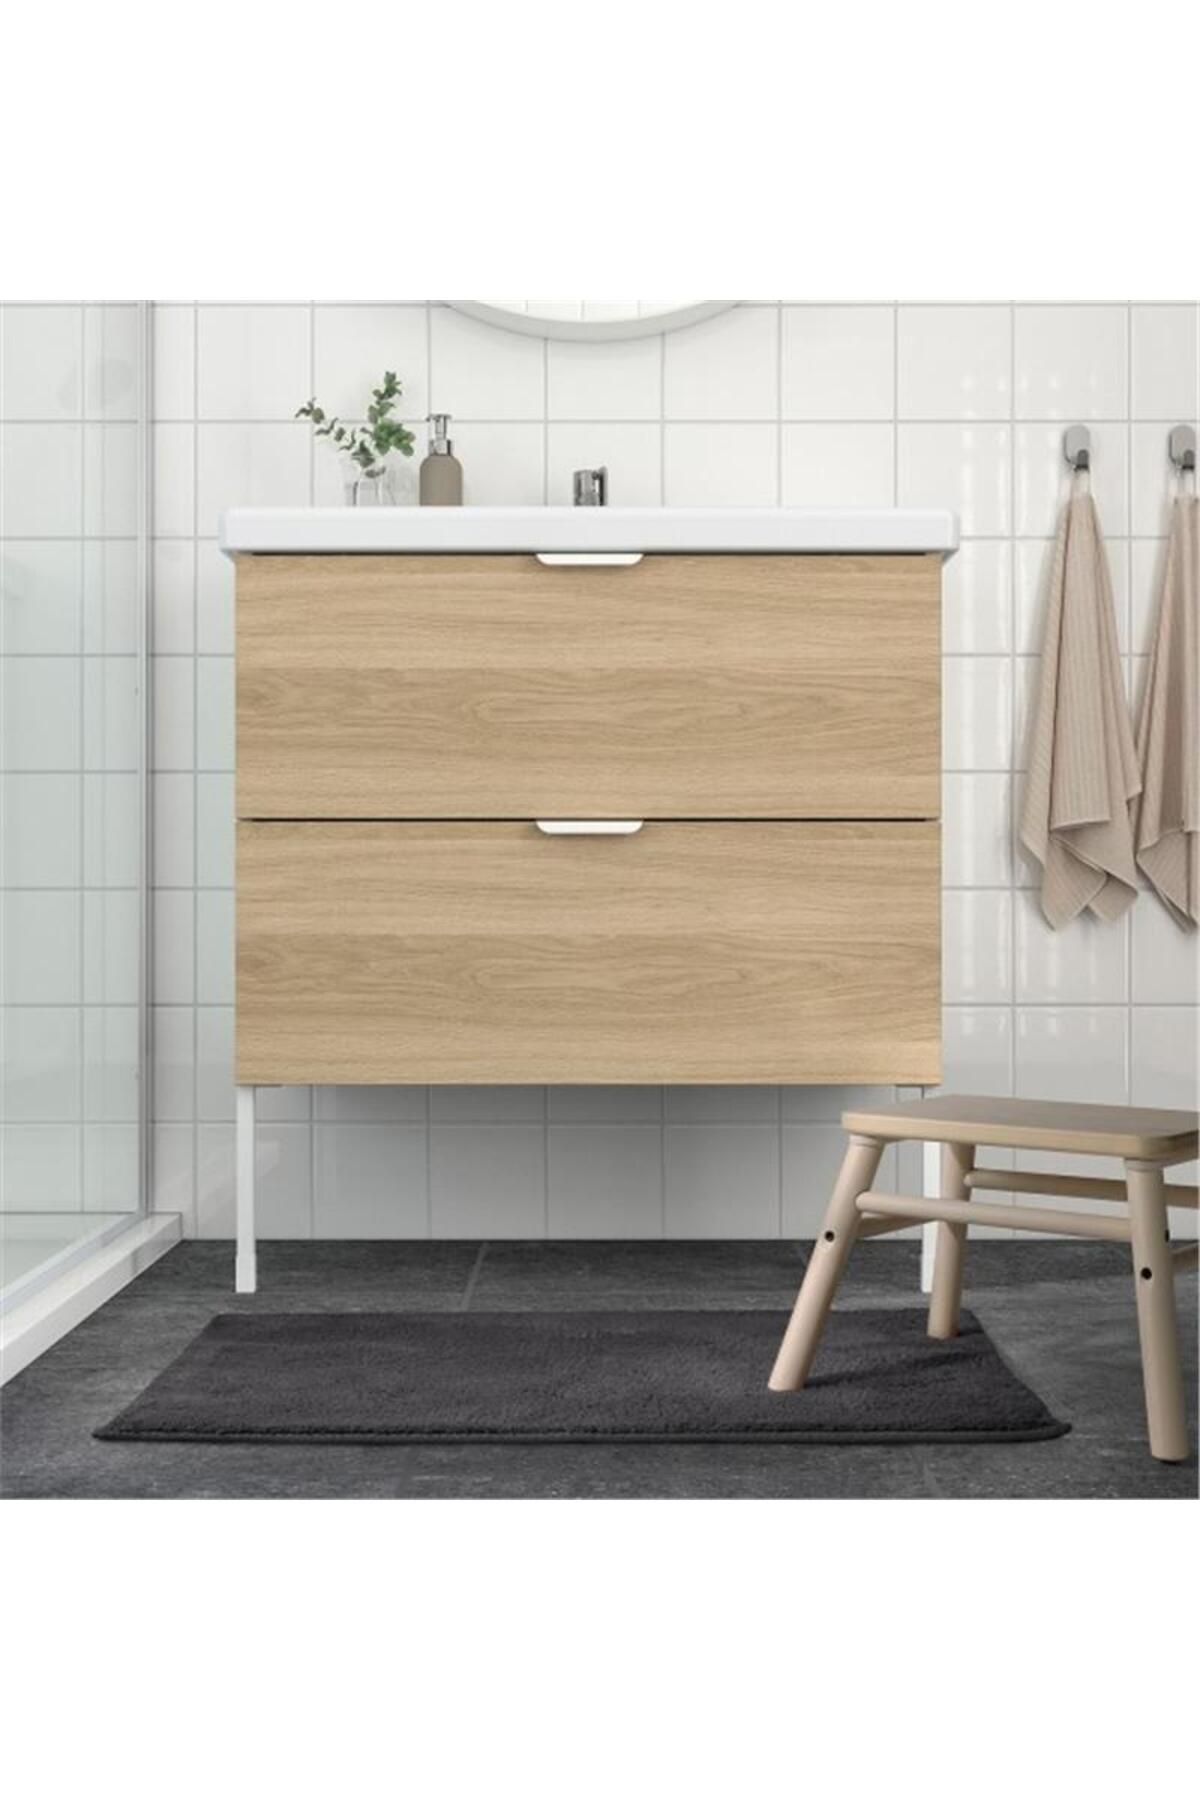 IKEA Södersjön Banyo Paspası Koyu Gri 50X80 Cm 00507985